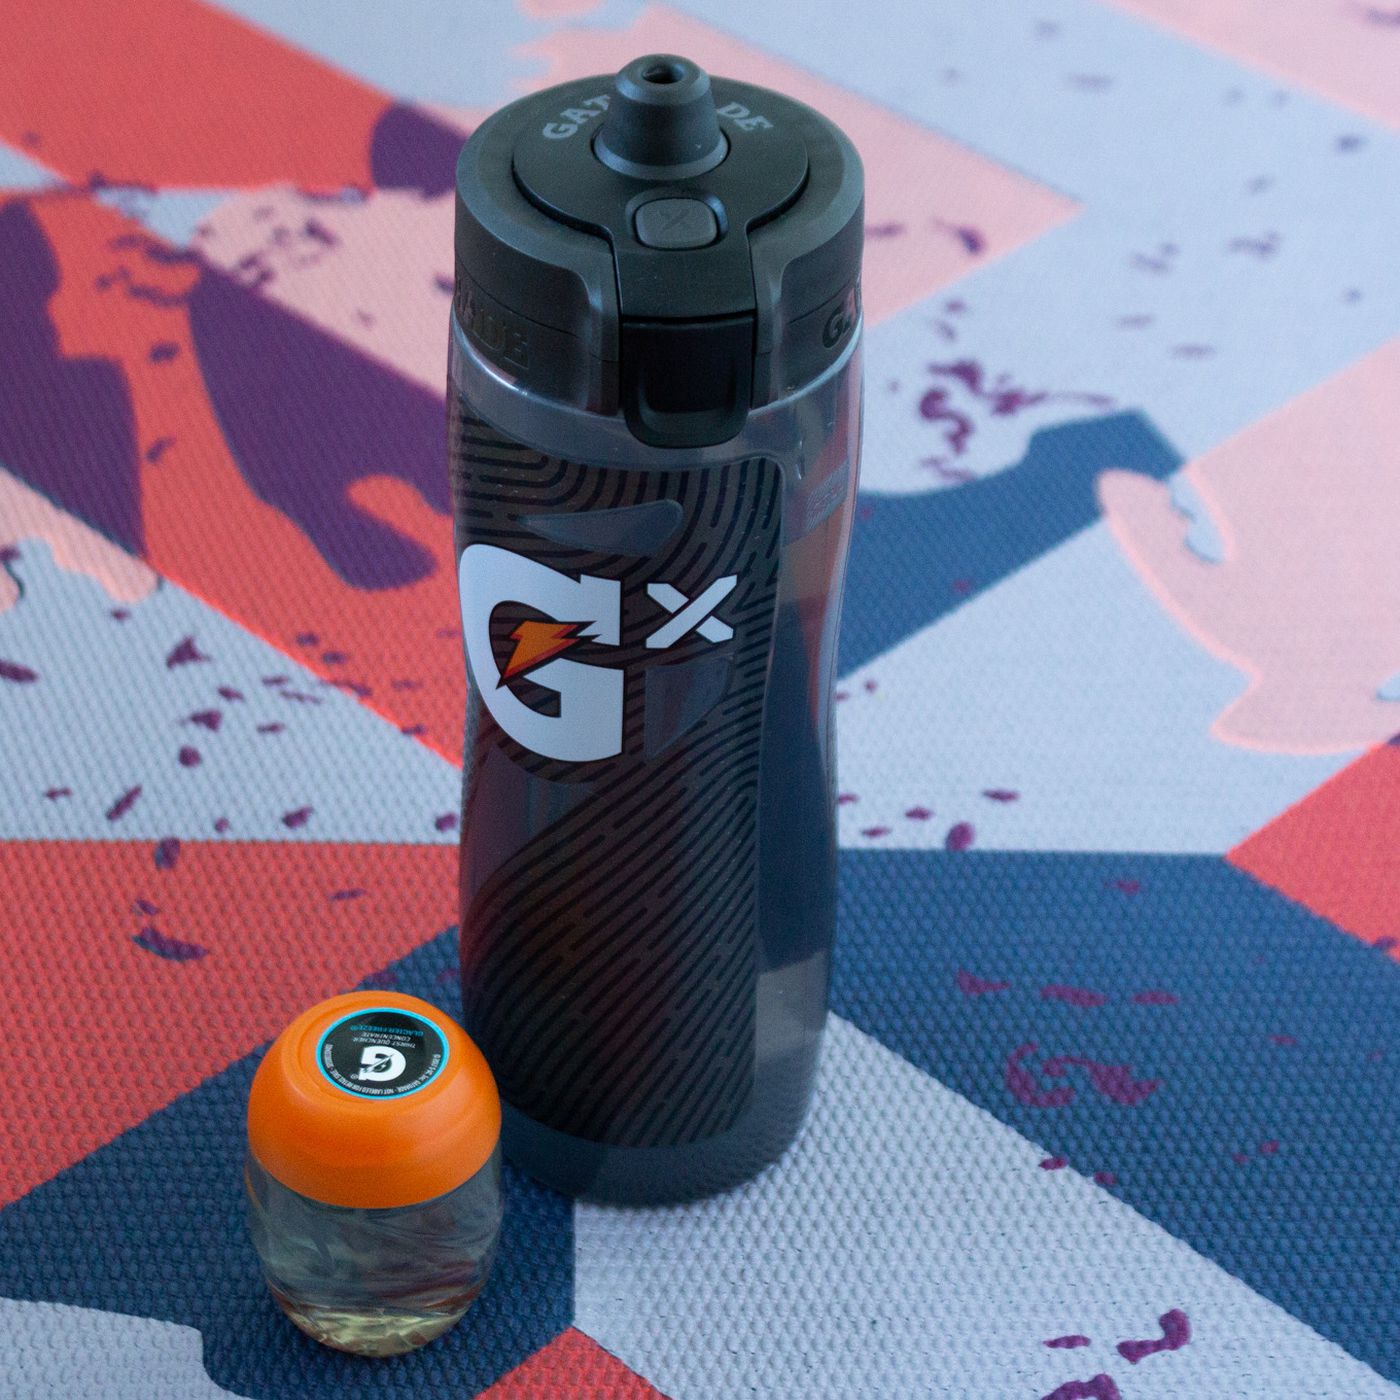 Gatorade Smart Gx review: hydration isn't rocket science - The Verge